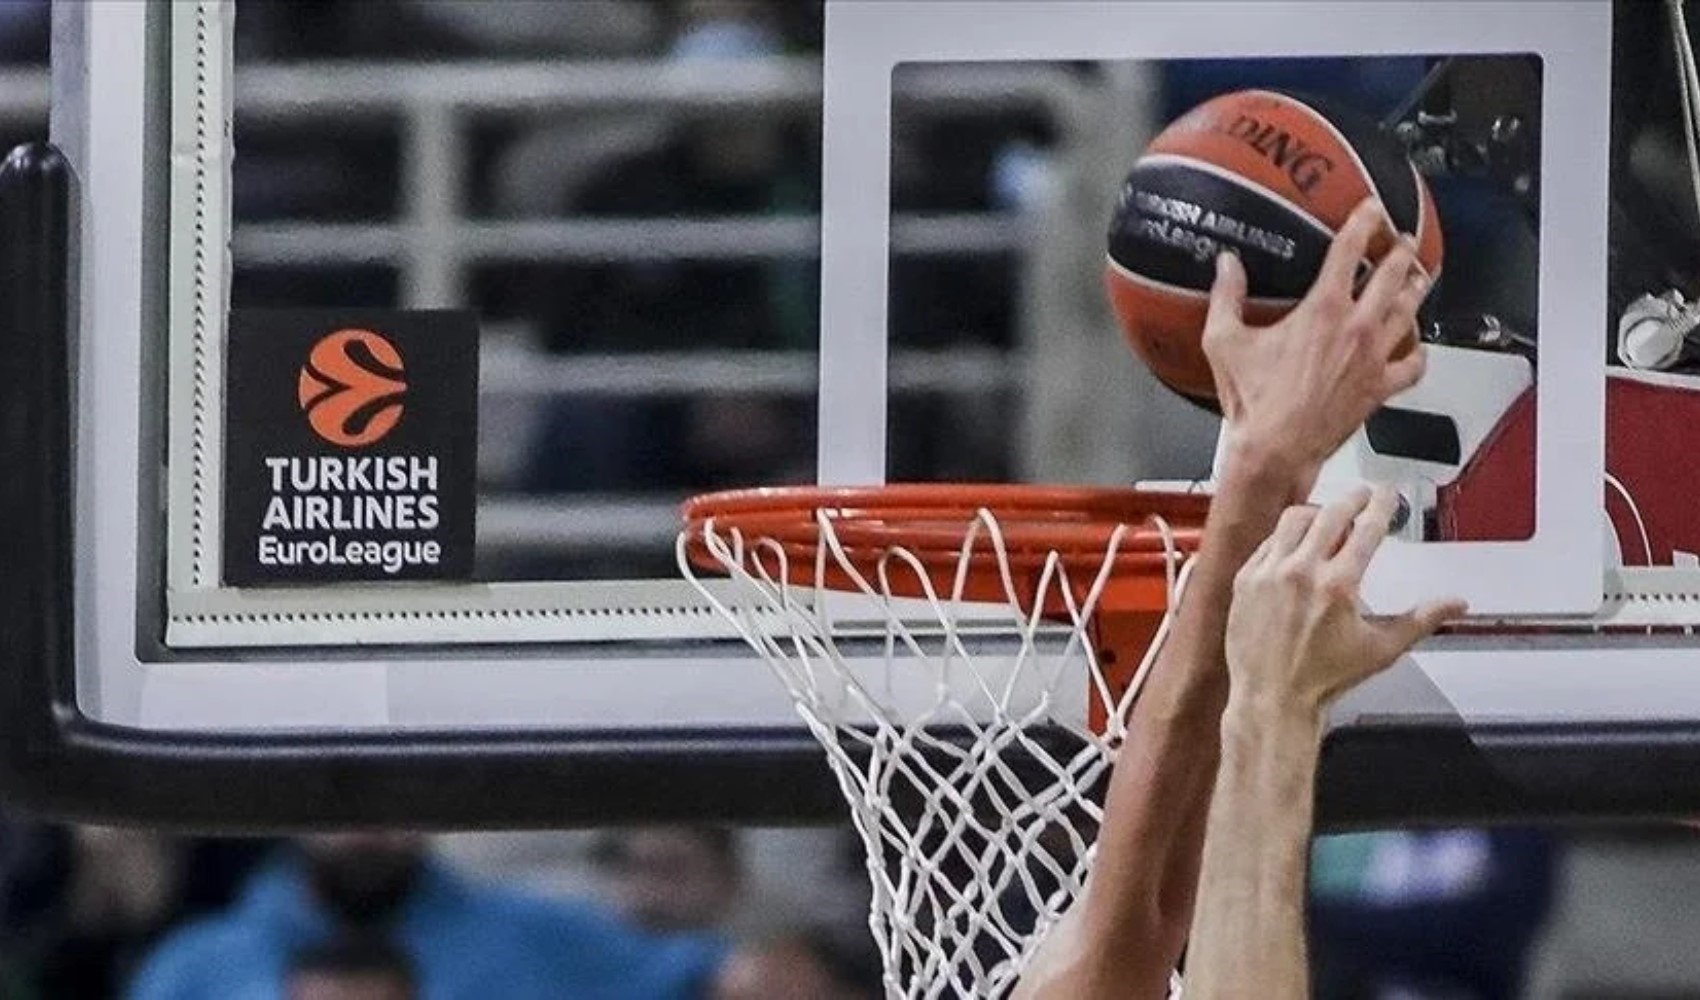 EuroLeague'de Play Off'a katılacak son takım belli oldu